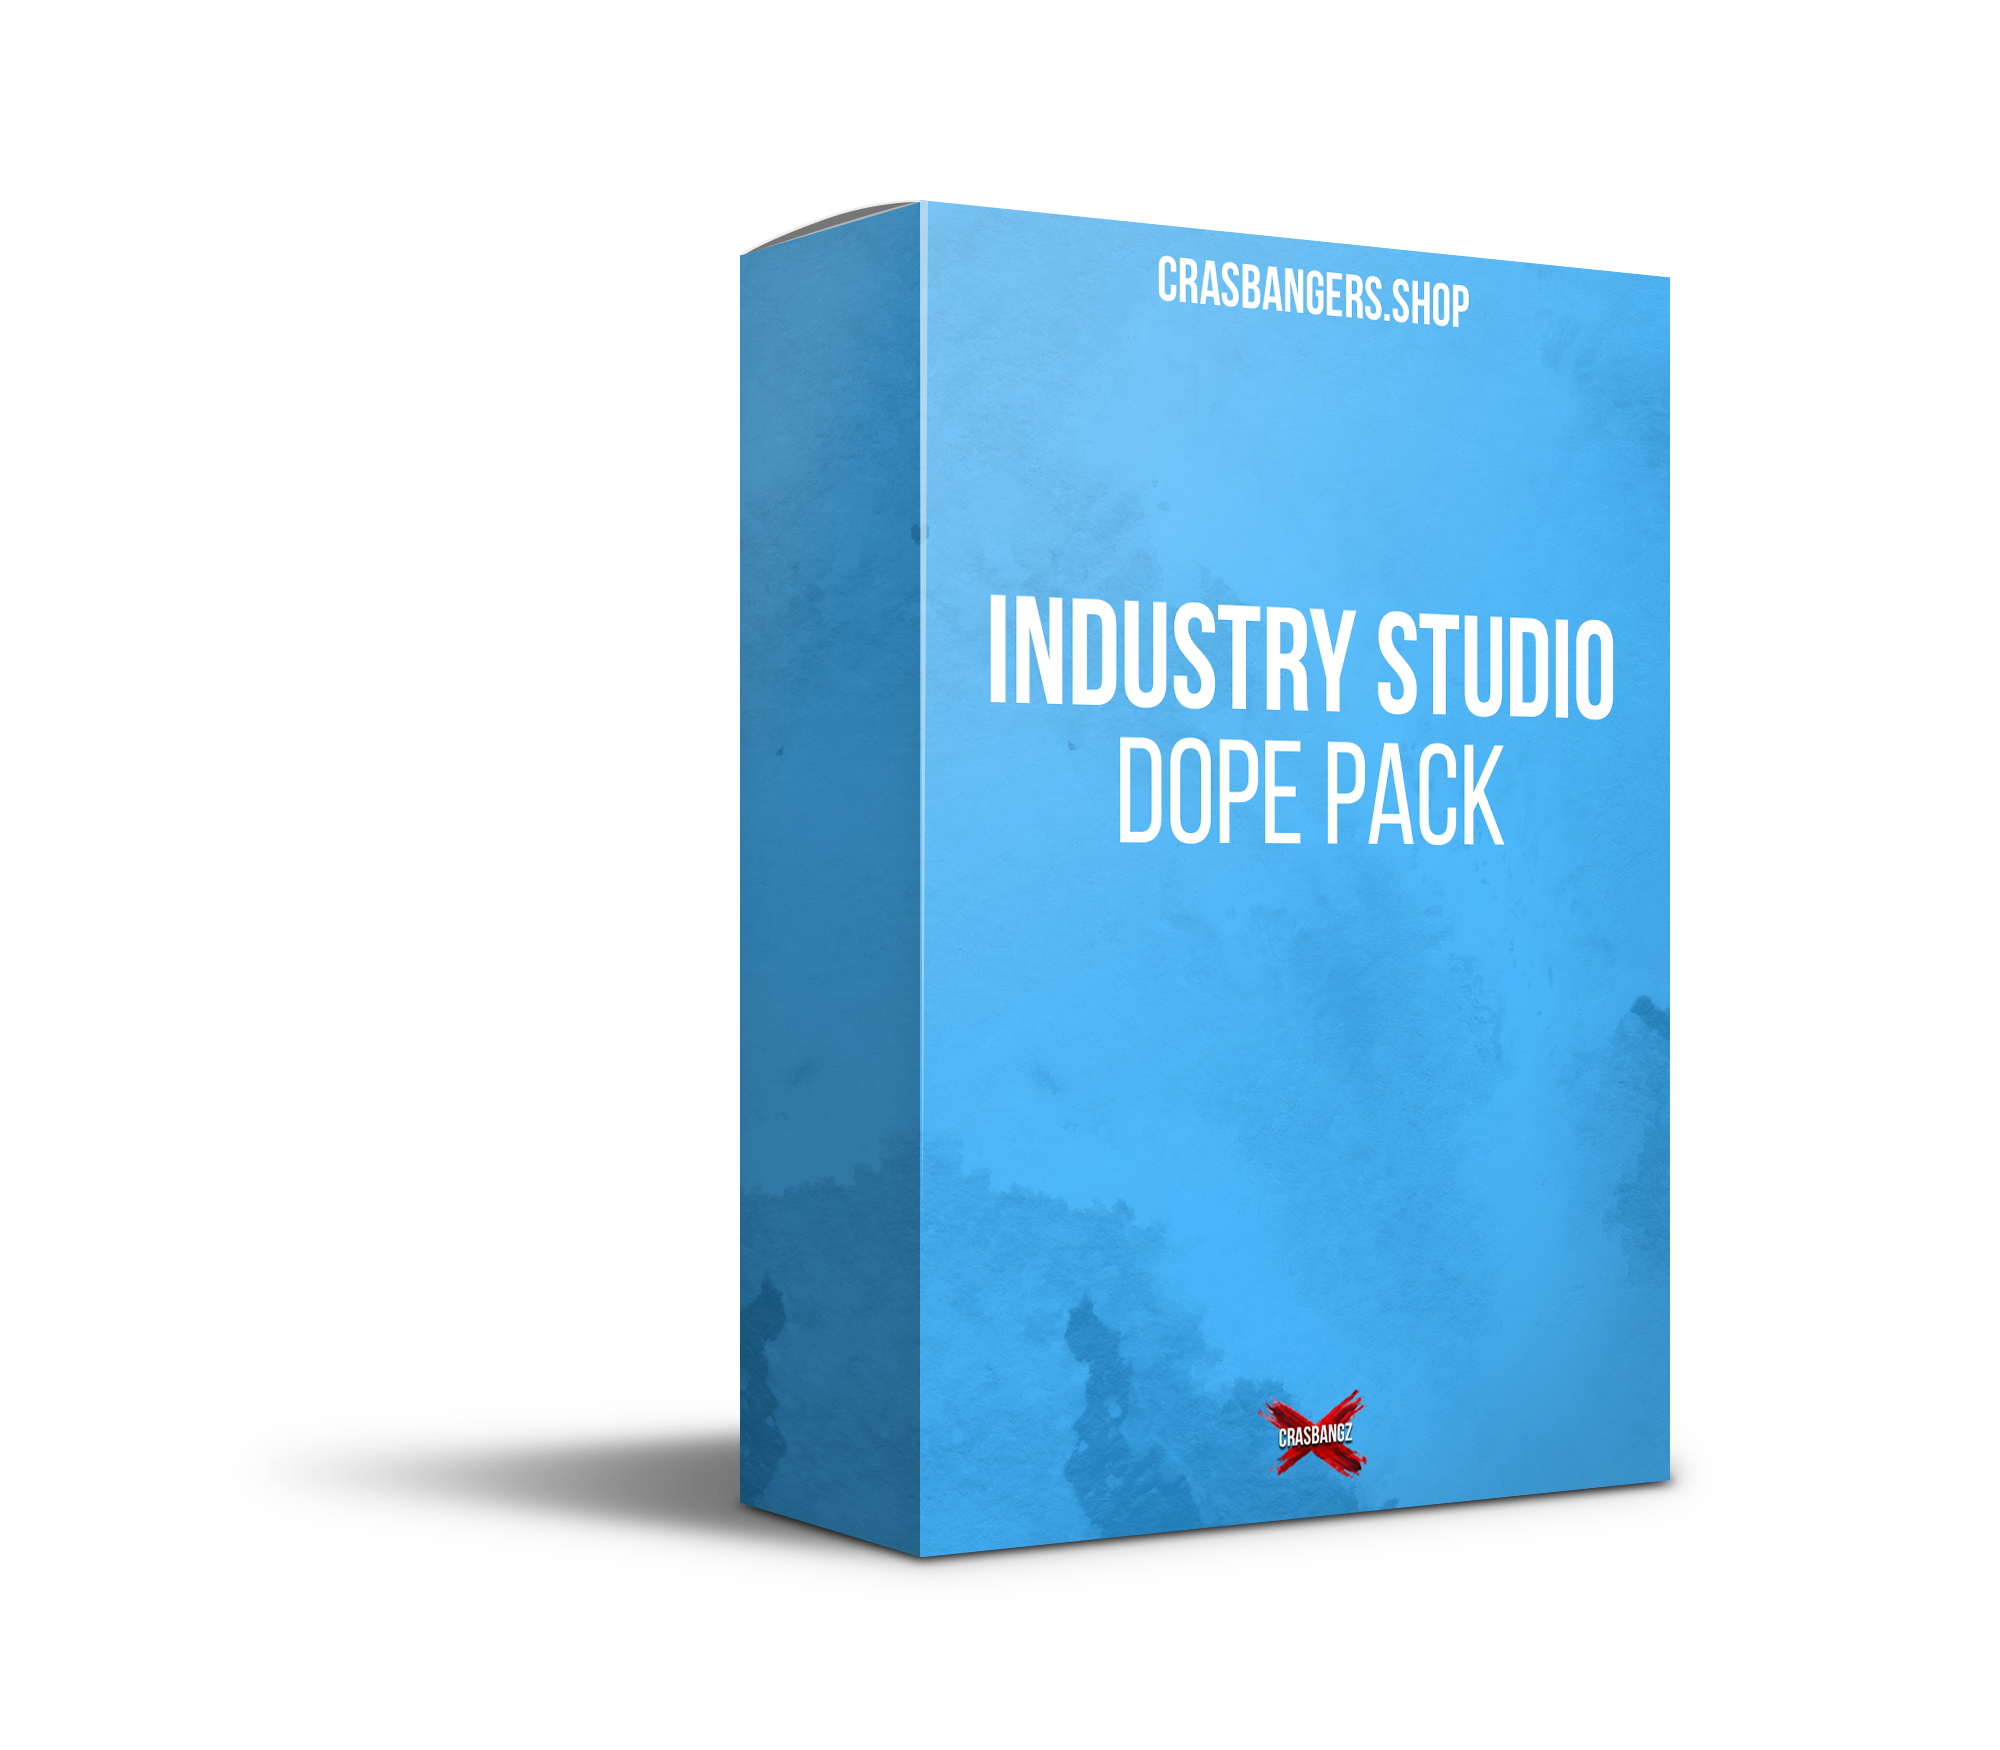 Industry Studio Dope Pack